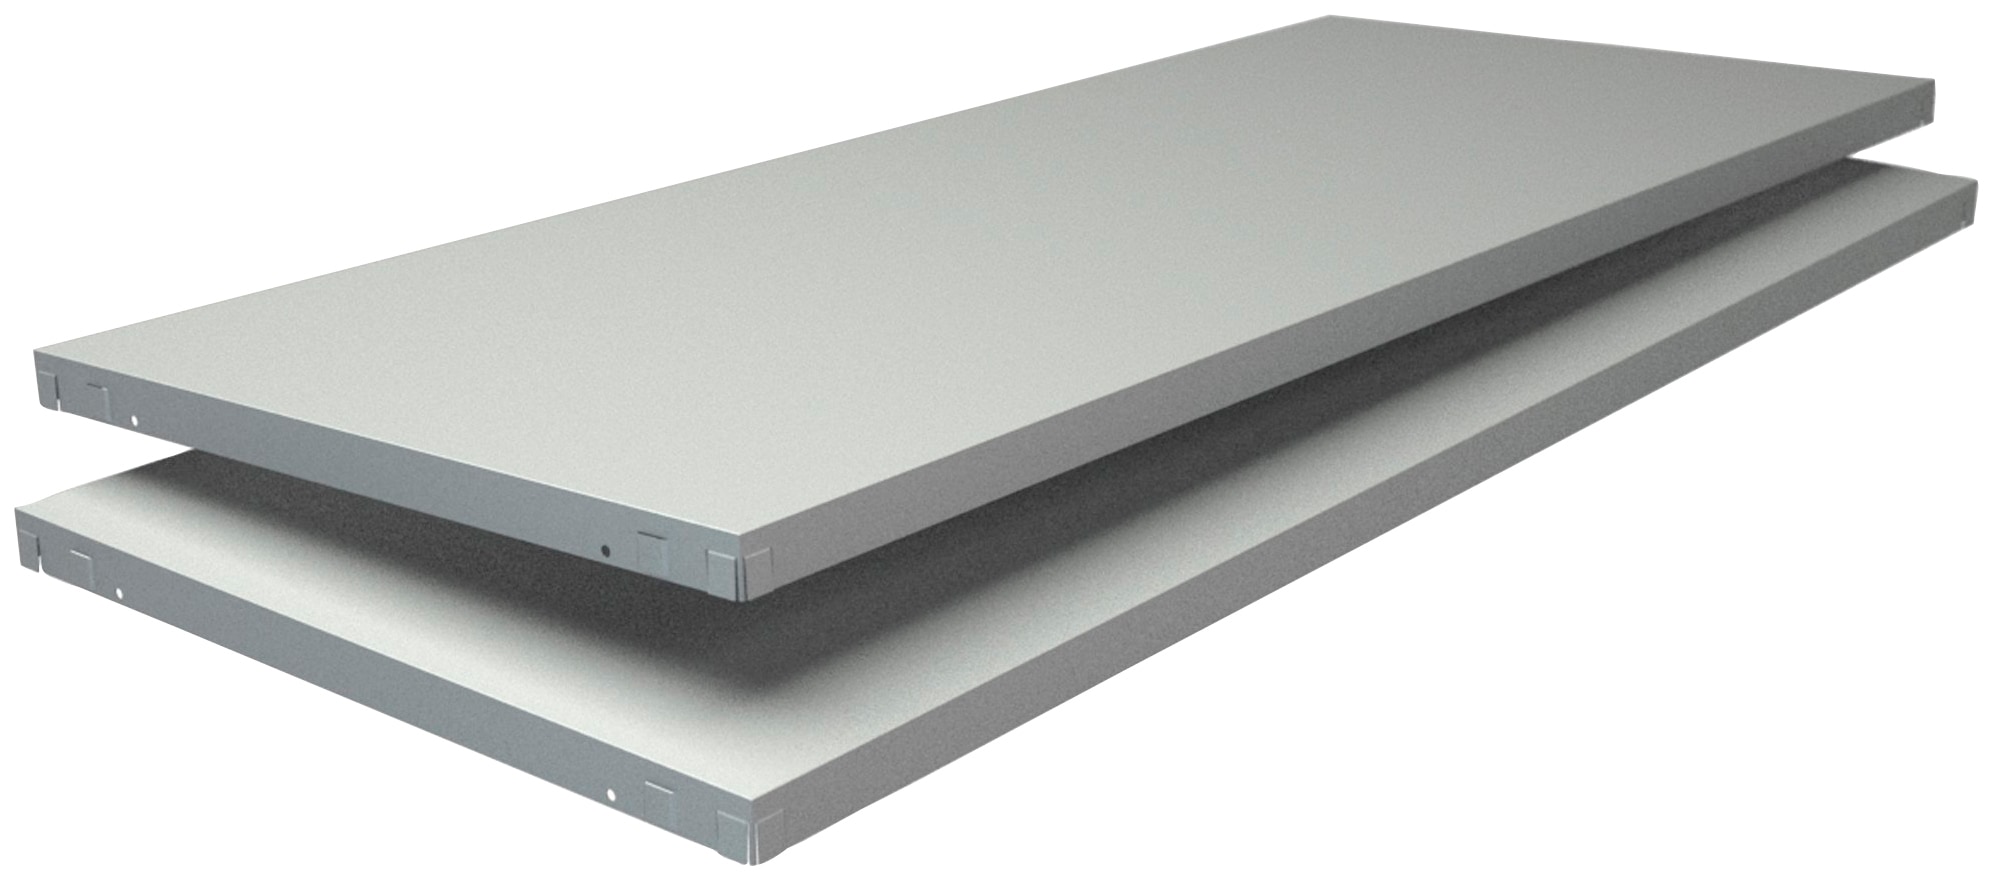 Online mm OTTO Regalwelt Shop 1200x500 PowerMax«, weiß, 2 »Stecksystem-Fachboden Regalelement SCHULTE Stück